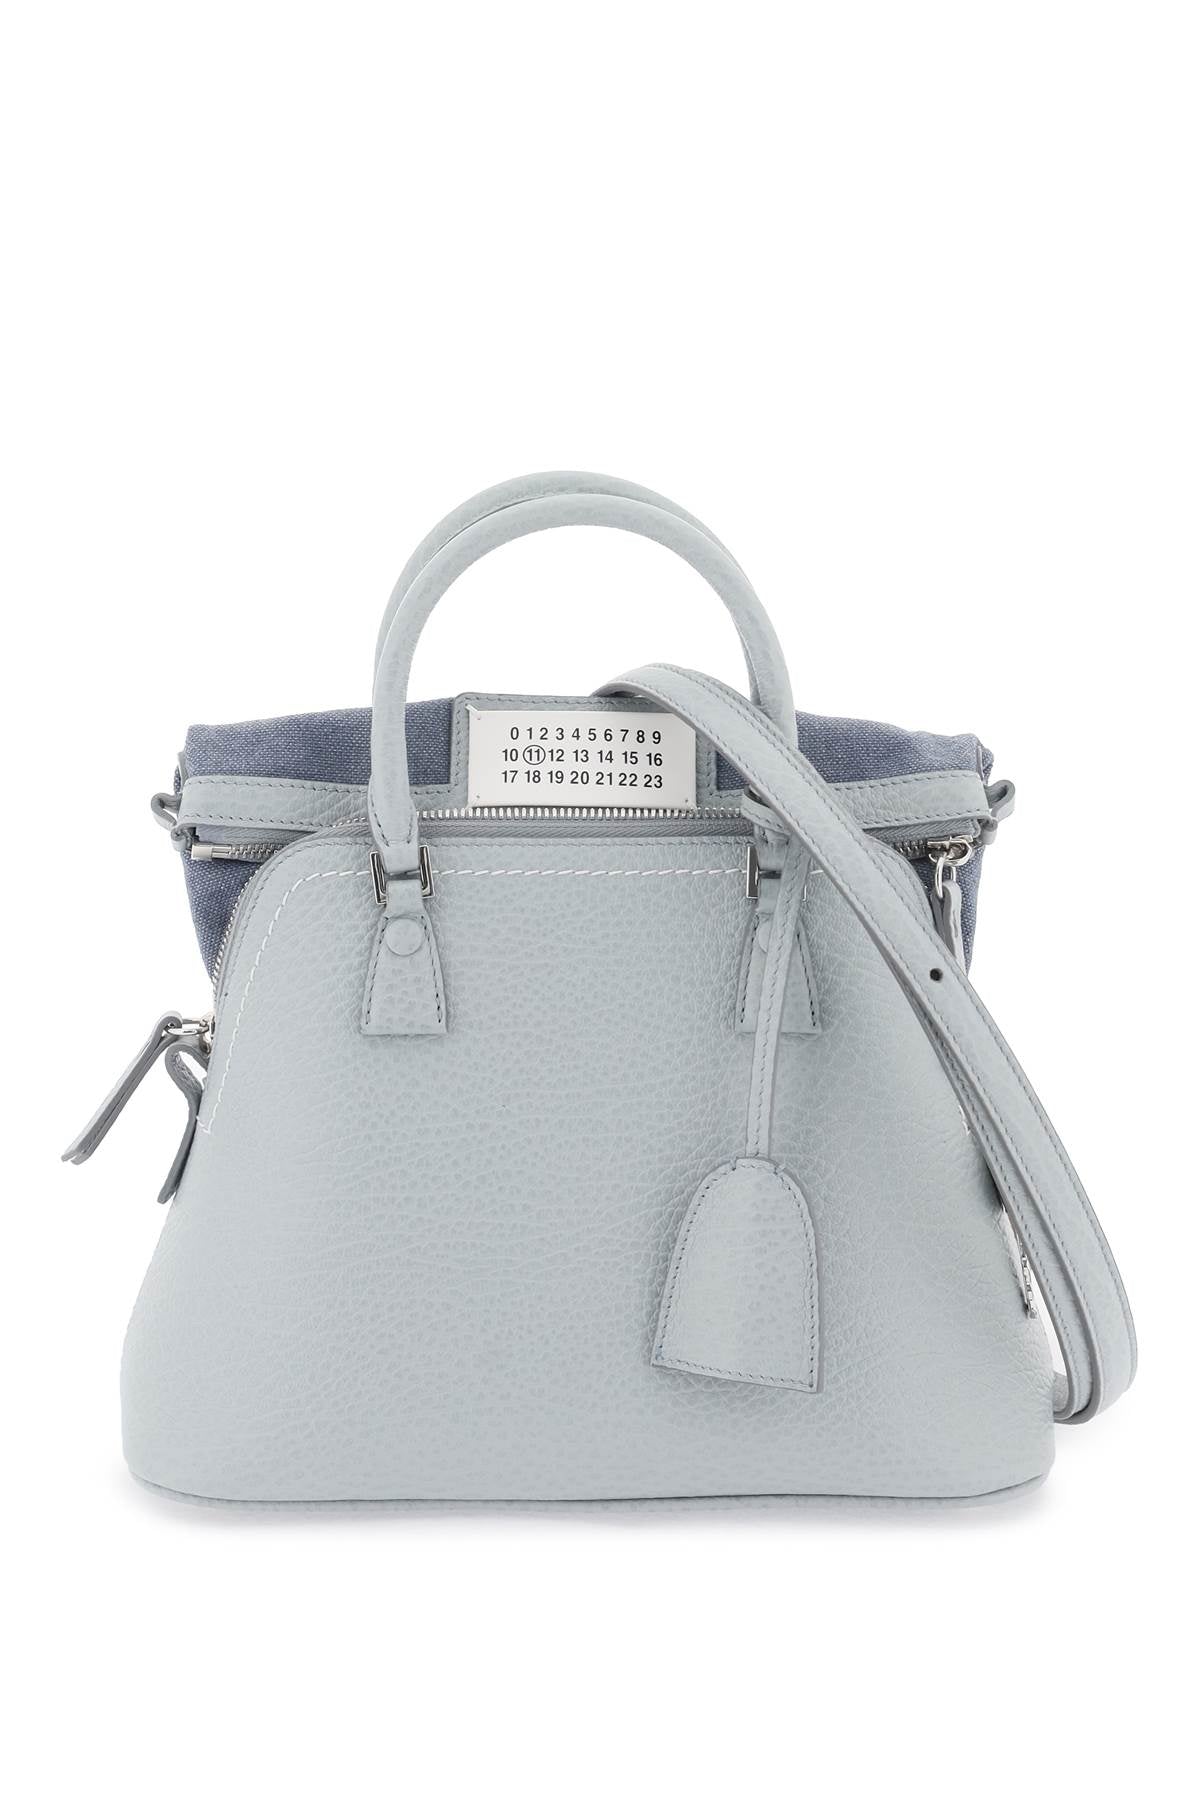 MAISON MARGIELA 5AC MINI Gray Leather Handbag with Unique Design and Unisex Appeal